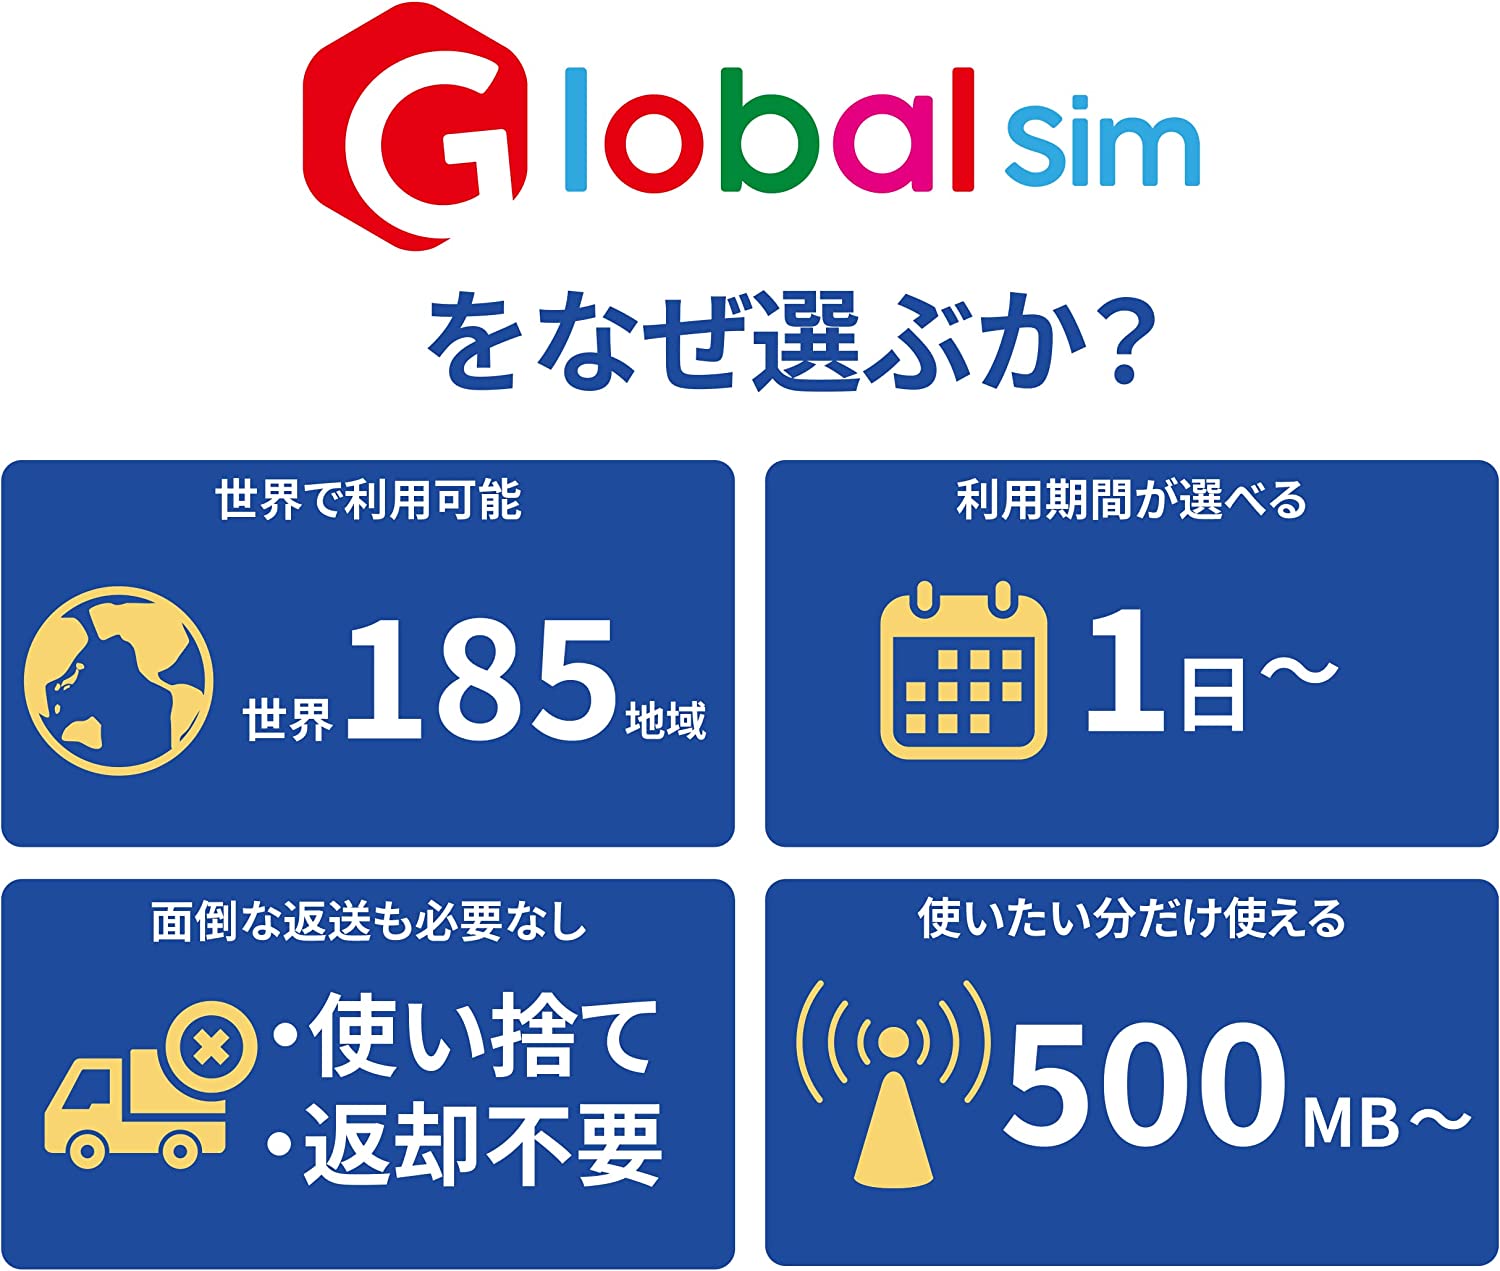 GLOBAL SIM 台湾 台北 10日間 データ無制限 (1GB 日高速）（容量を使い切っても利用期間内は最大384kbps） データ通信専用 シムフリー端末のみ対応 追加費用なし・契約不要